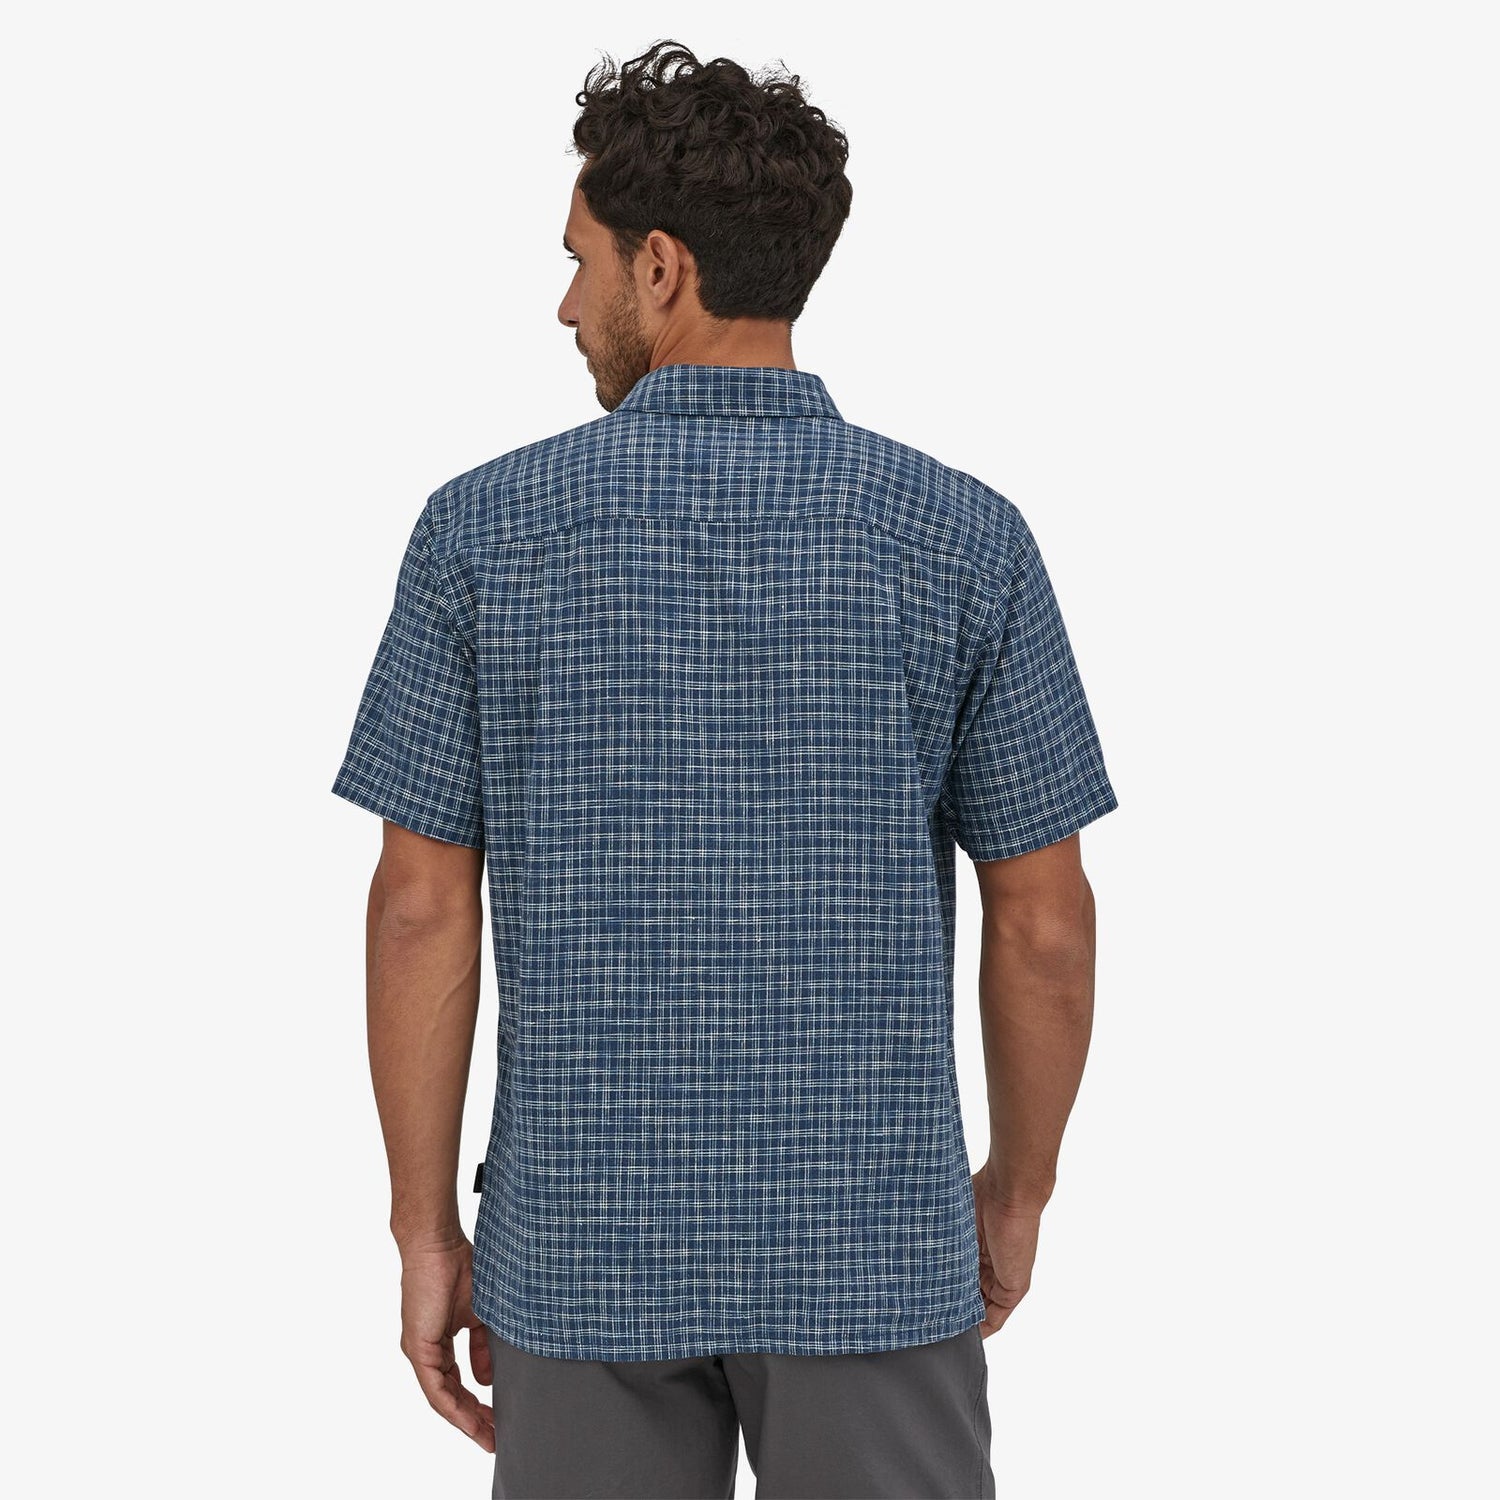 Patagonia M's Back Step Shirt - Hemp and Cotton Ikat Net: Stone Blue Shirt